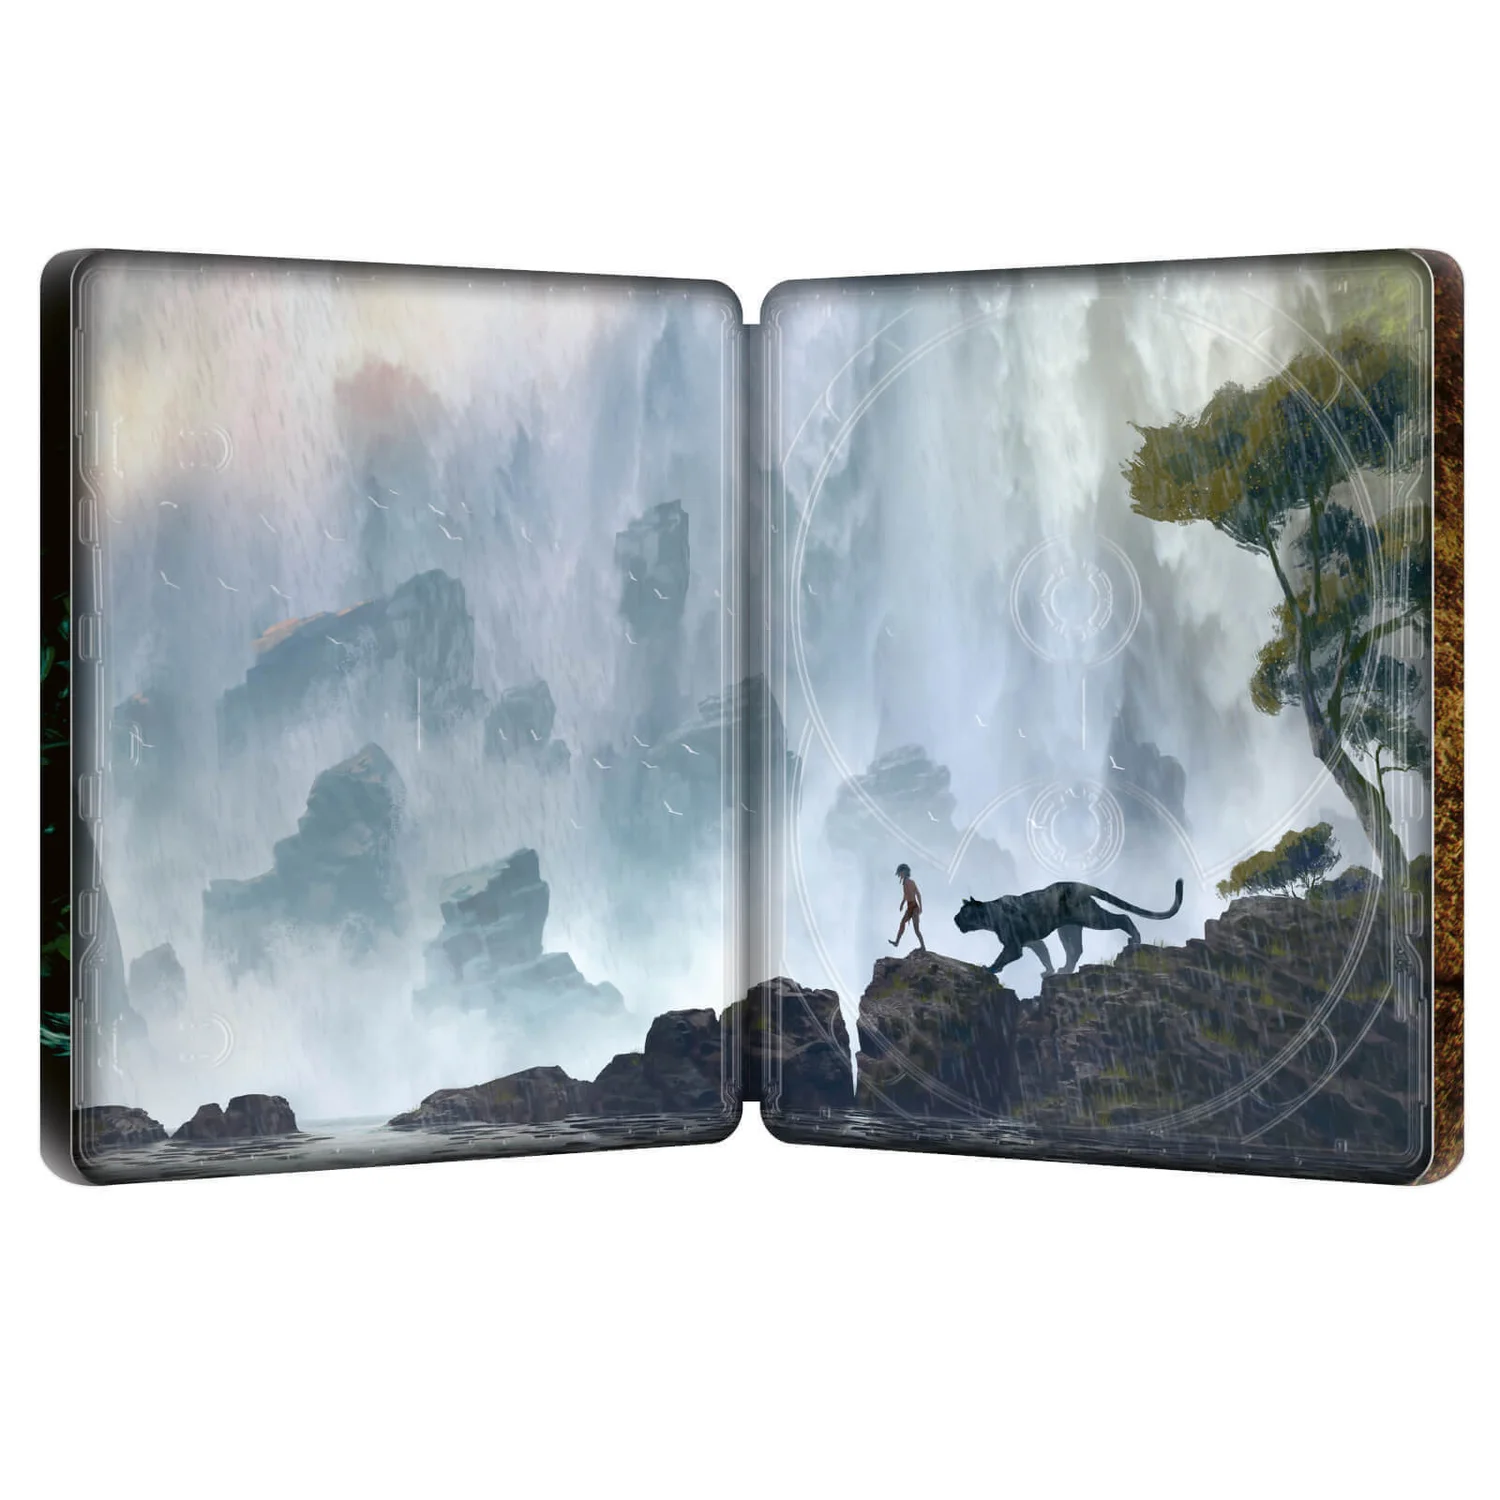 The Jungle Book (Live Action) – Zavvi Exclusive 4K Ultra HD Steelbook (Includes 2D Blu-ray)